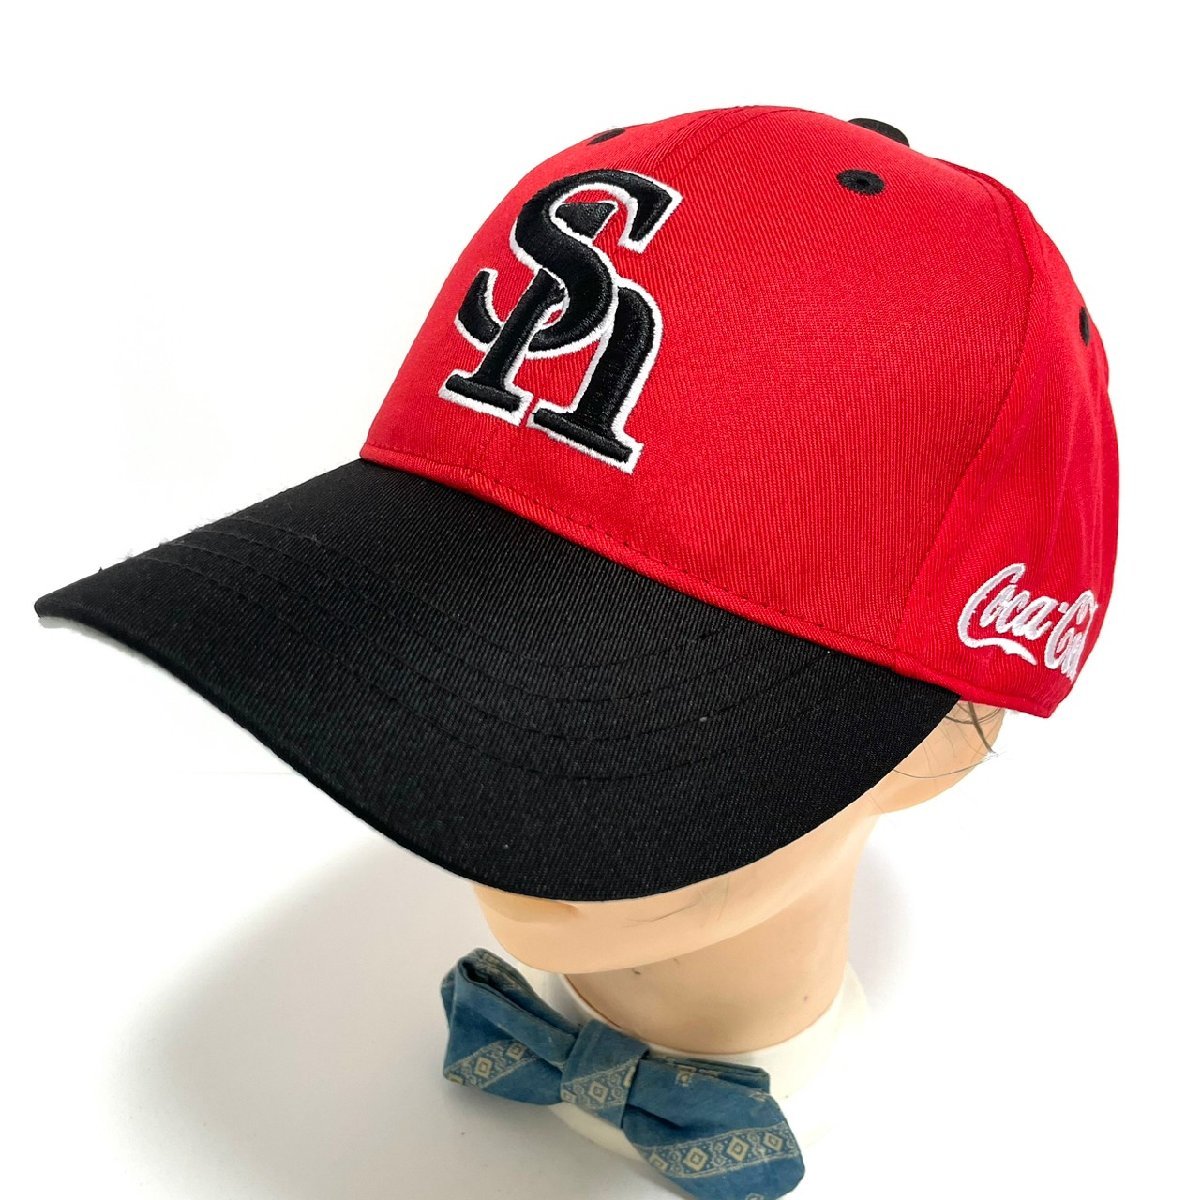 (^w^)b 未使用 コカコーラ 福岡 ソフトバンク ホークス ベースボール キャップ 帽子 赤×黒 HAWKS Coca-Cola FREE 57cm-61cm C0261EEの画像1